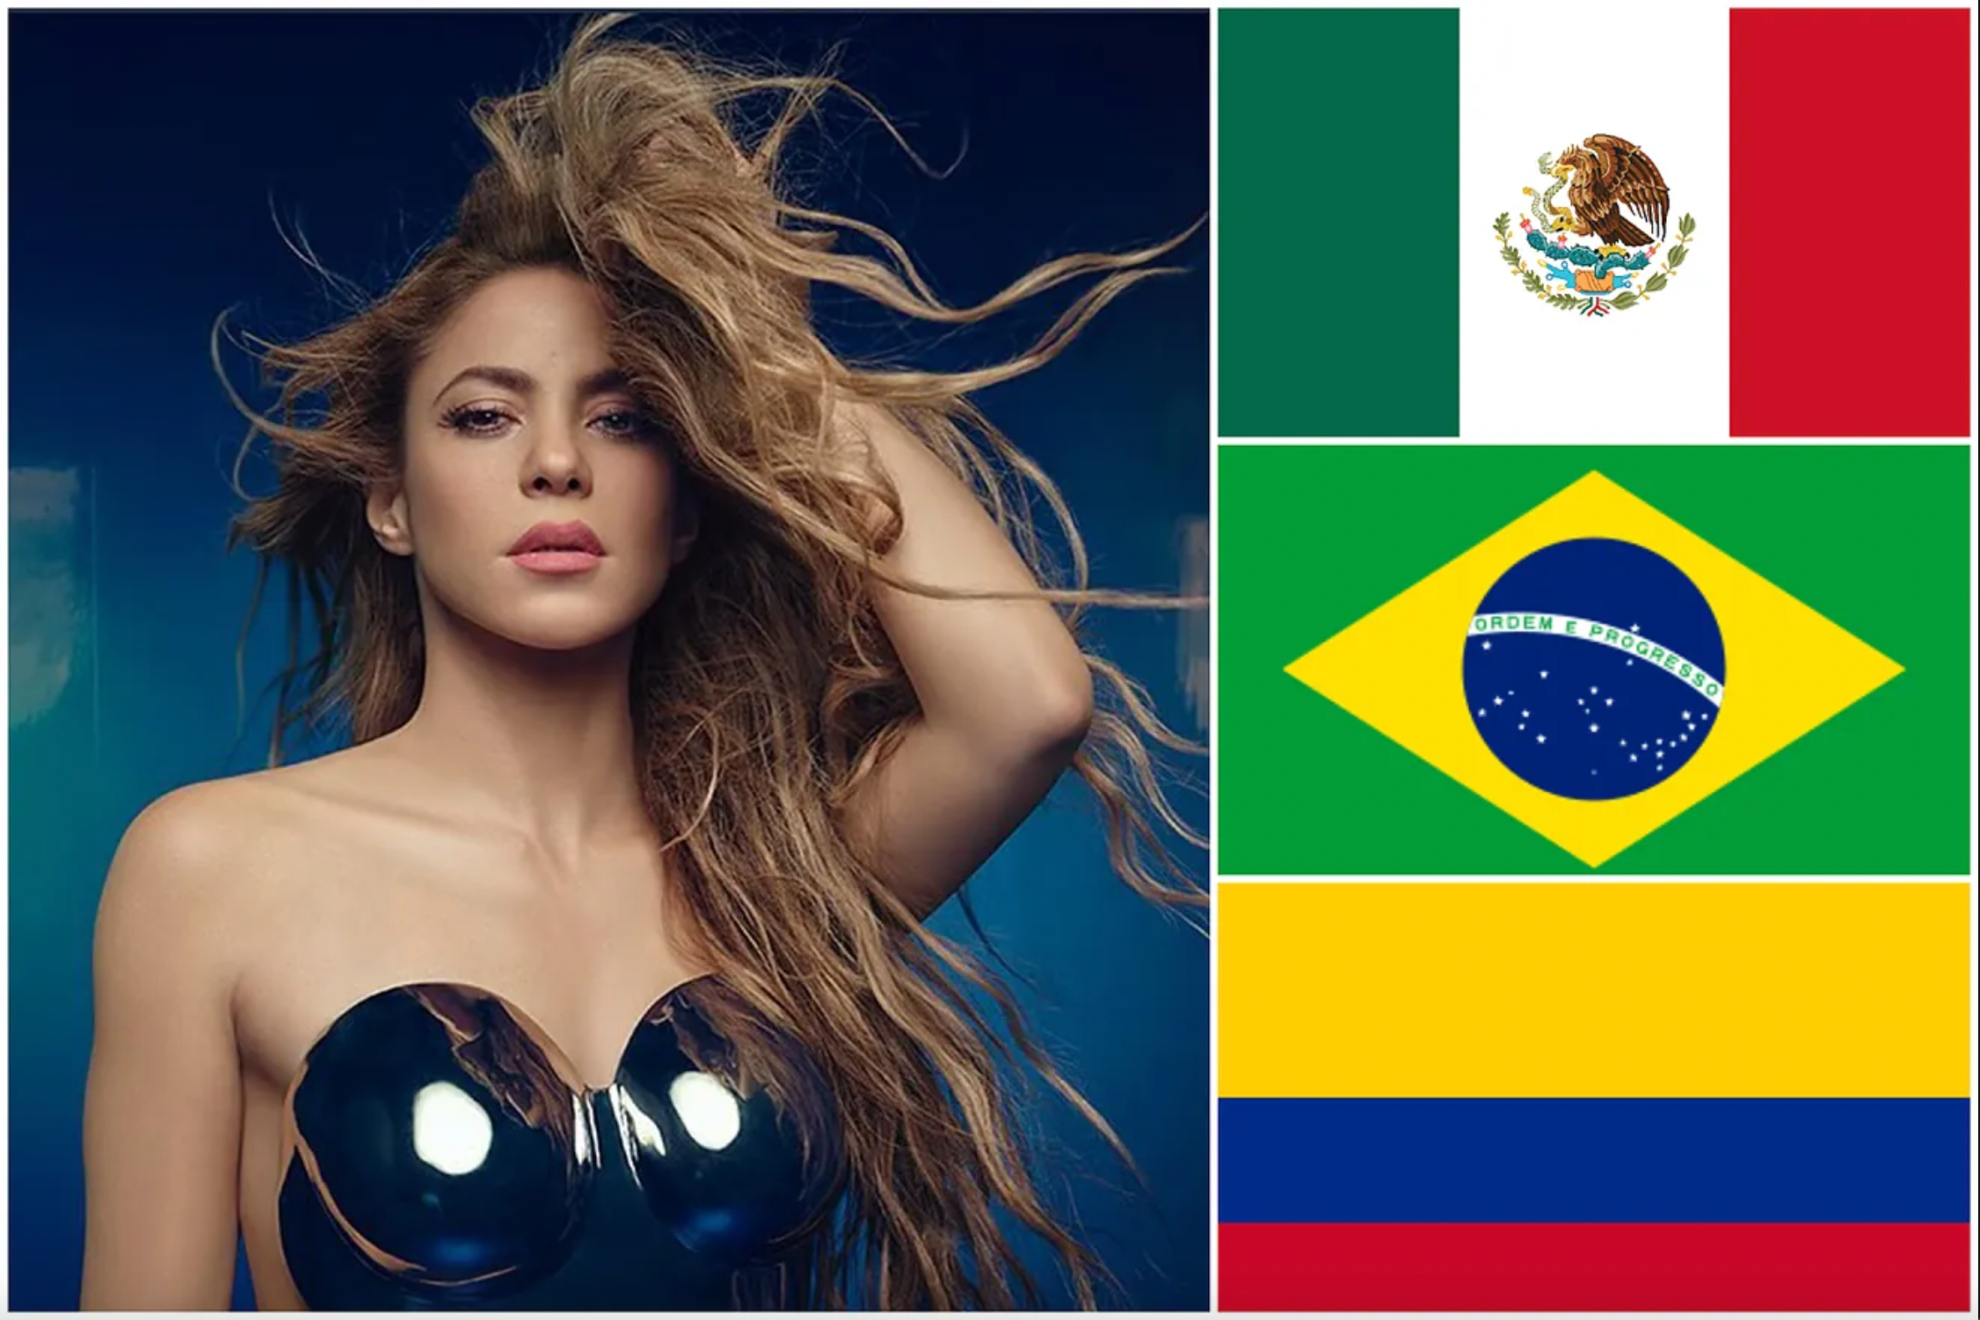 Free Shakira concerts in Mexico, Rio de Janeiro and Bogota to present Women no longer cry